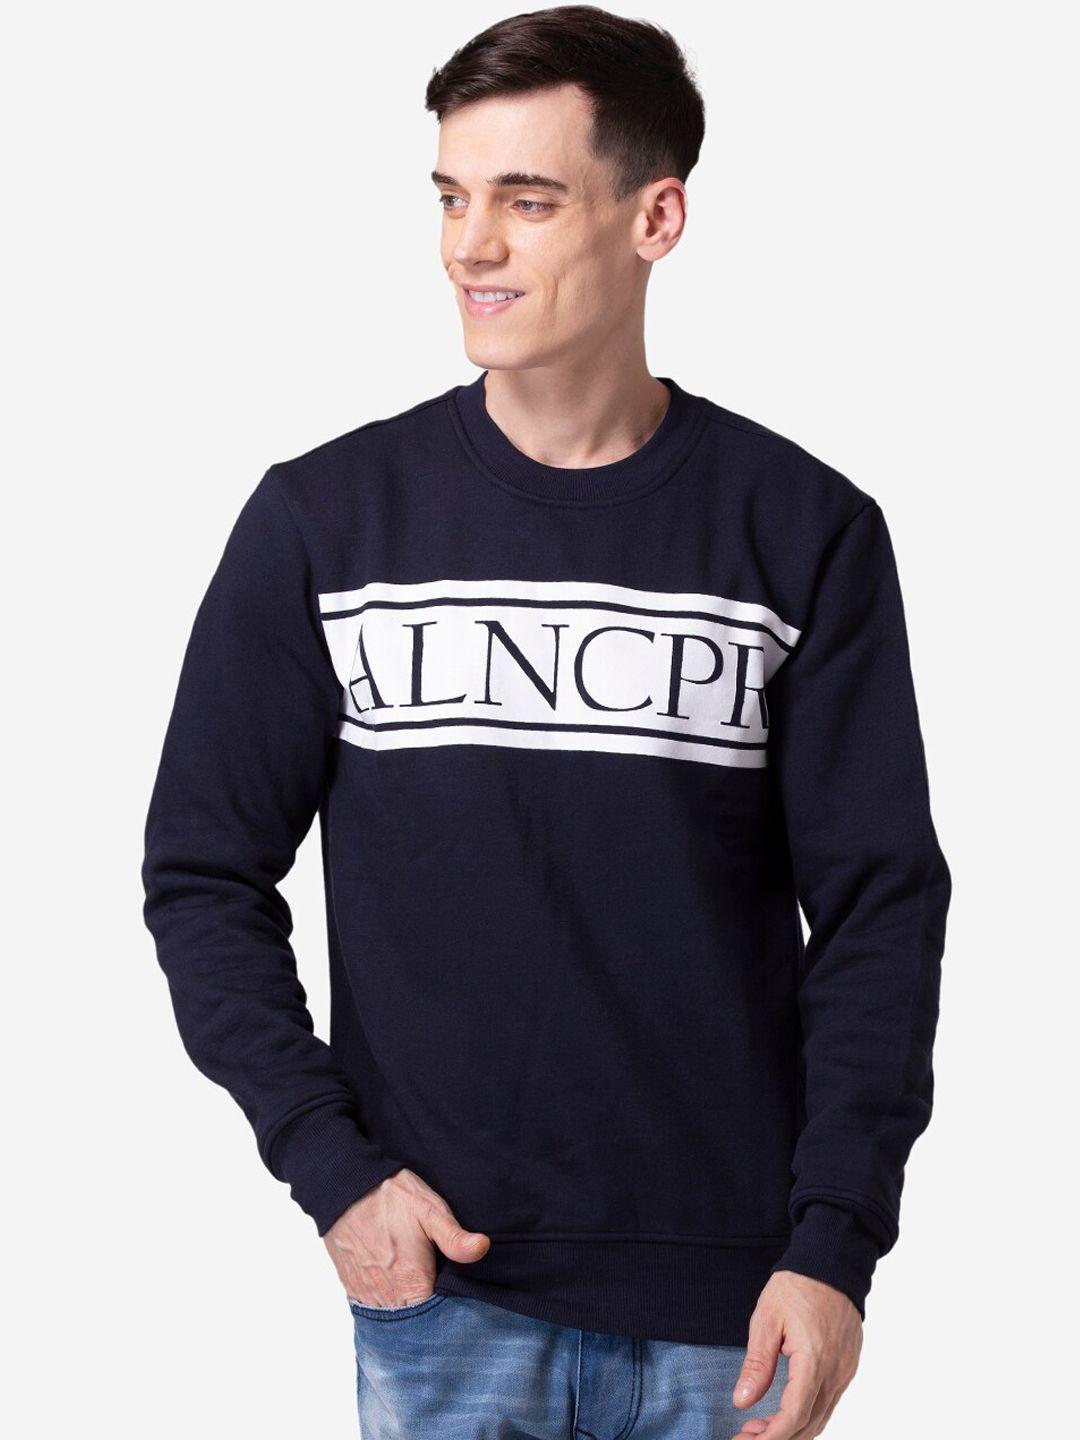 allen-cooper-men-navy-blue-&-white-printed-sweatshirt